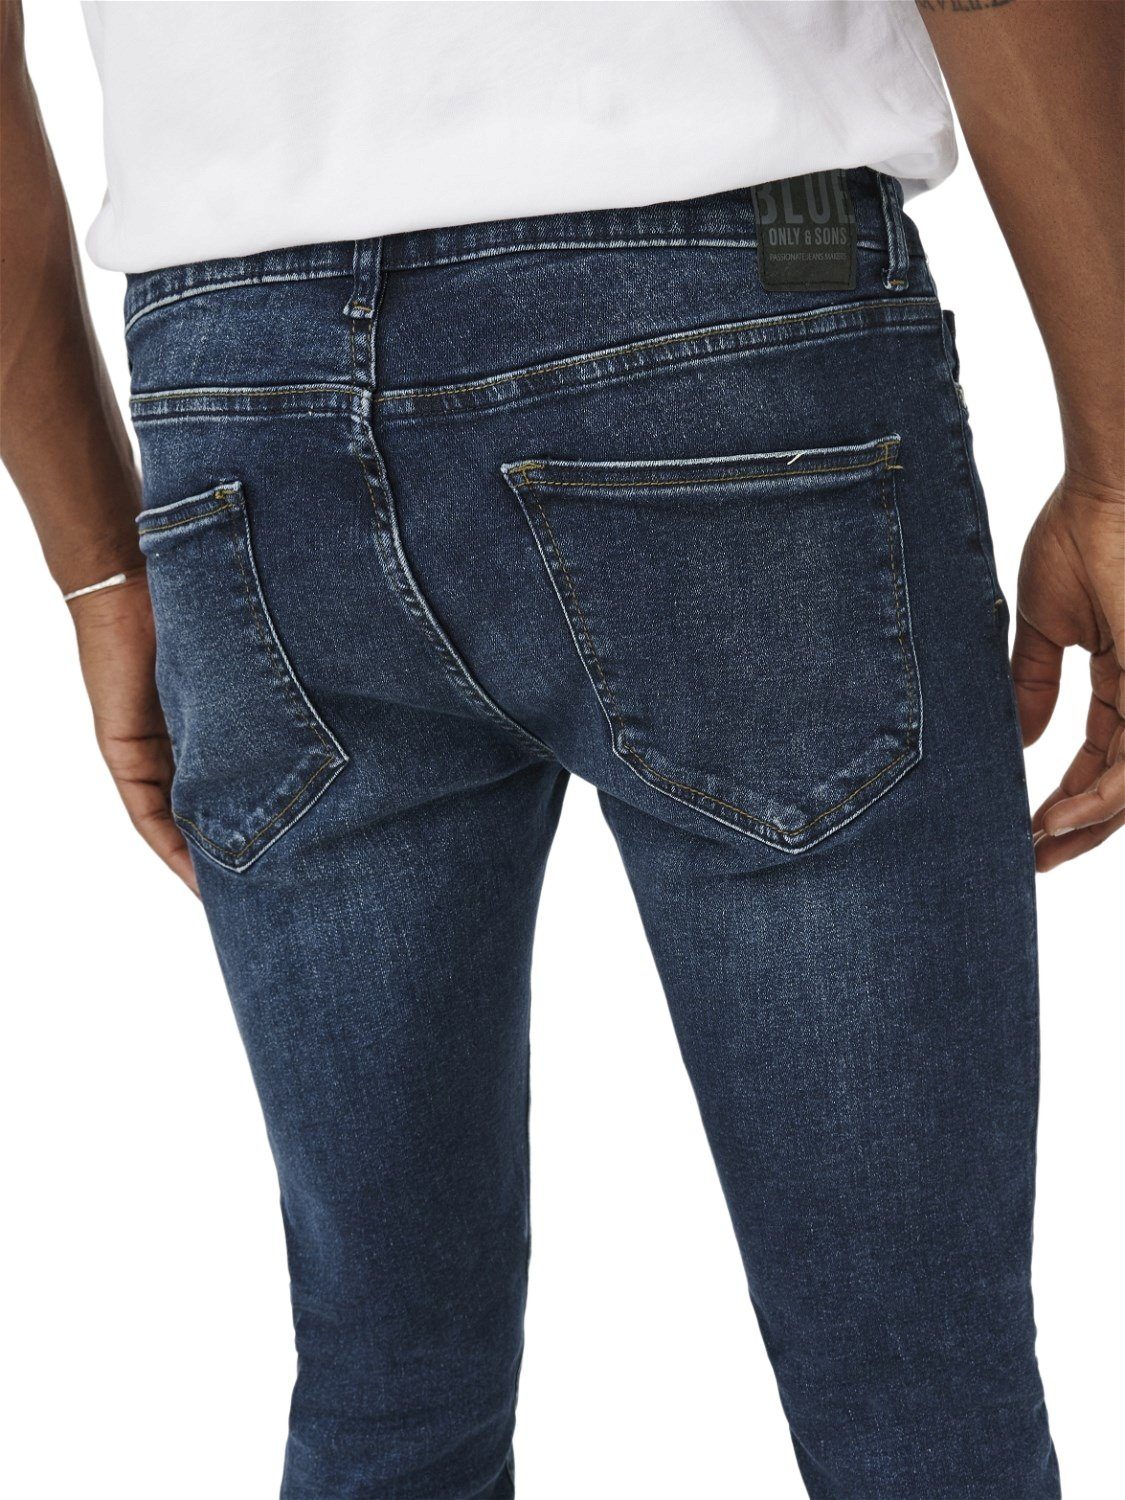 ONLY & SONS Skinny-fit-Jeans ONSWARP BLUE MA SKINNY 9809 mit Stretch